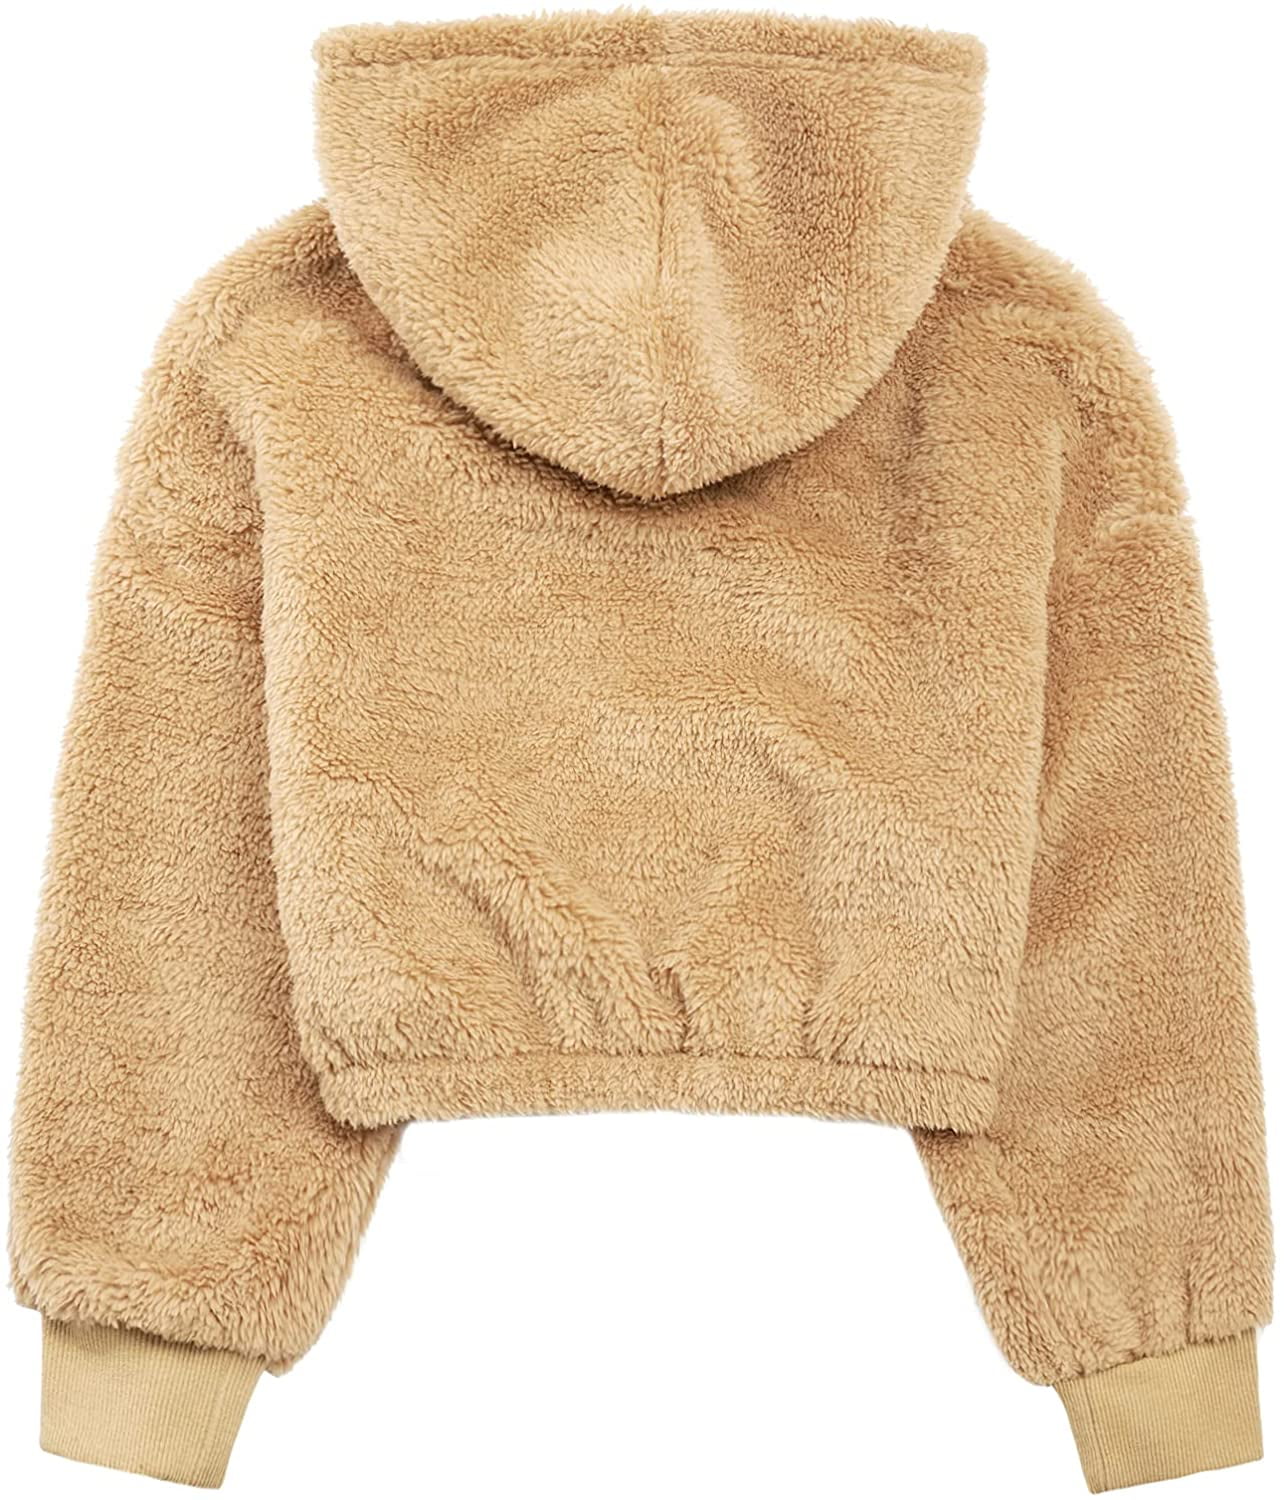 Girls Zip up Sherpa Hoodie Fleece Lined Sweatshirt Long Sleeve Pullover Warm Top 